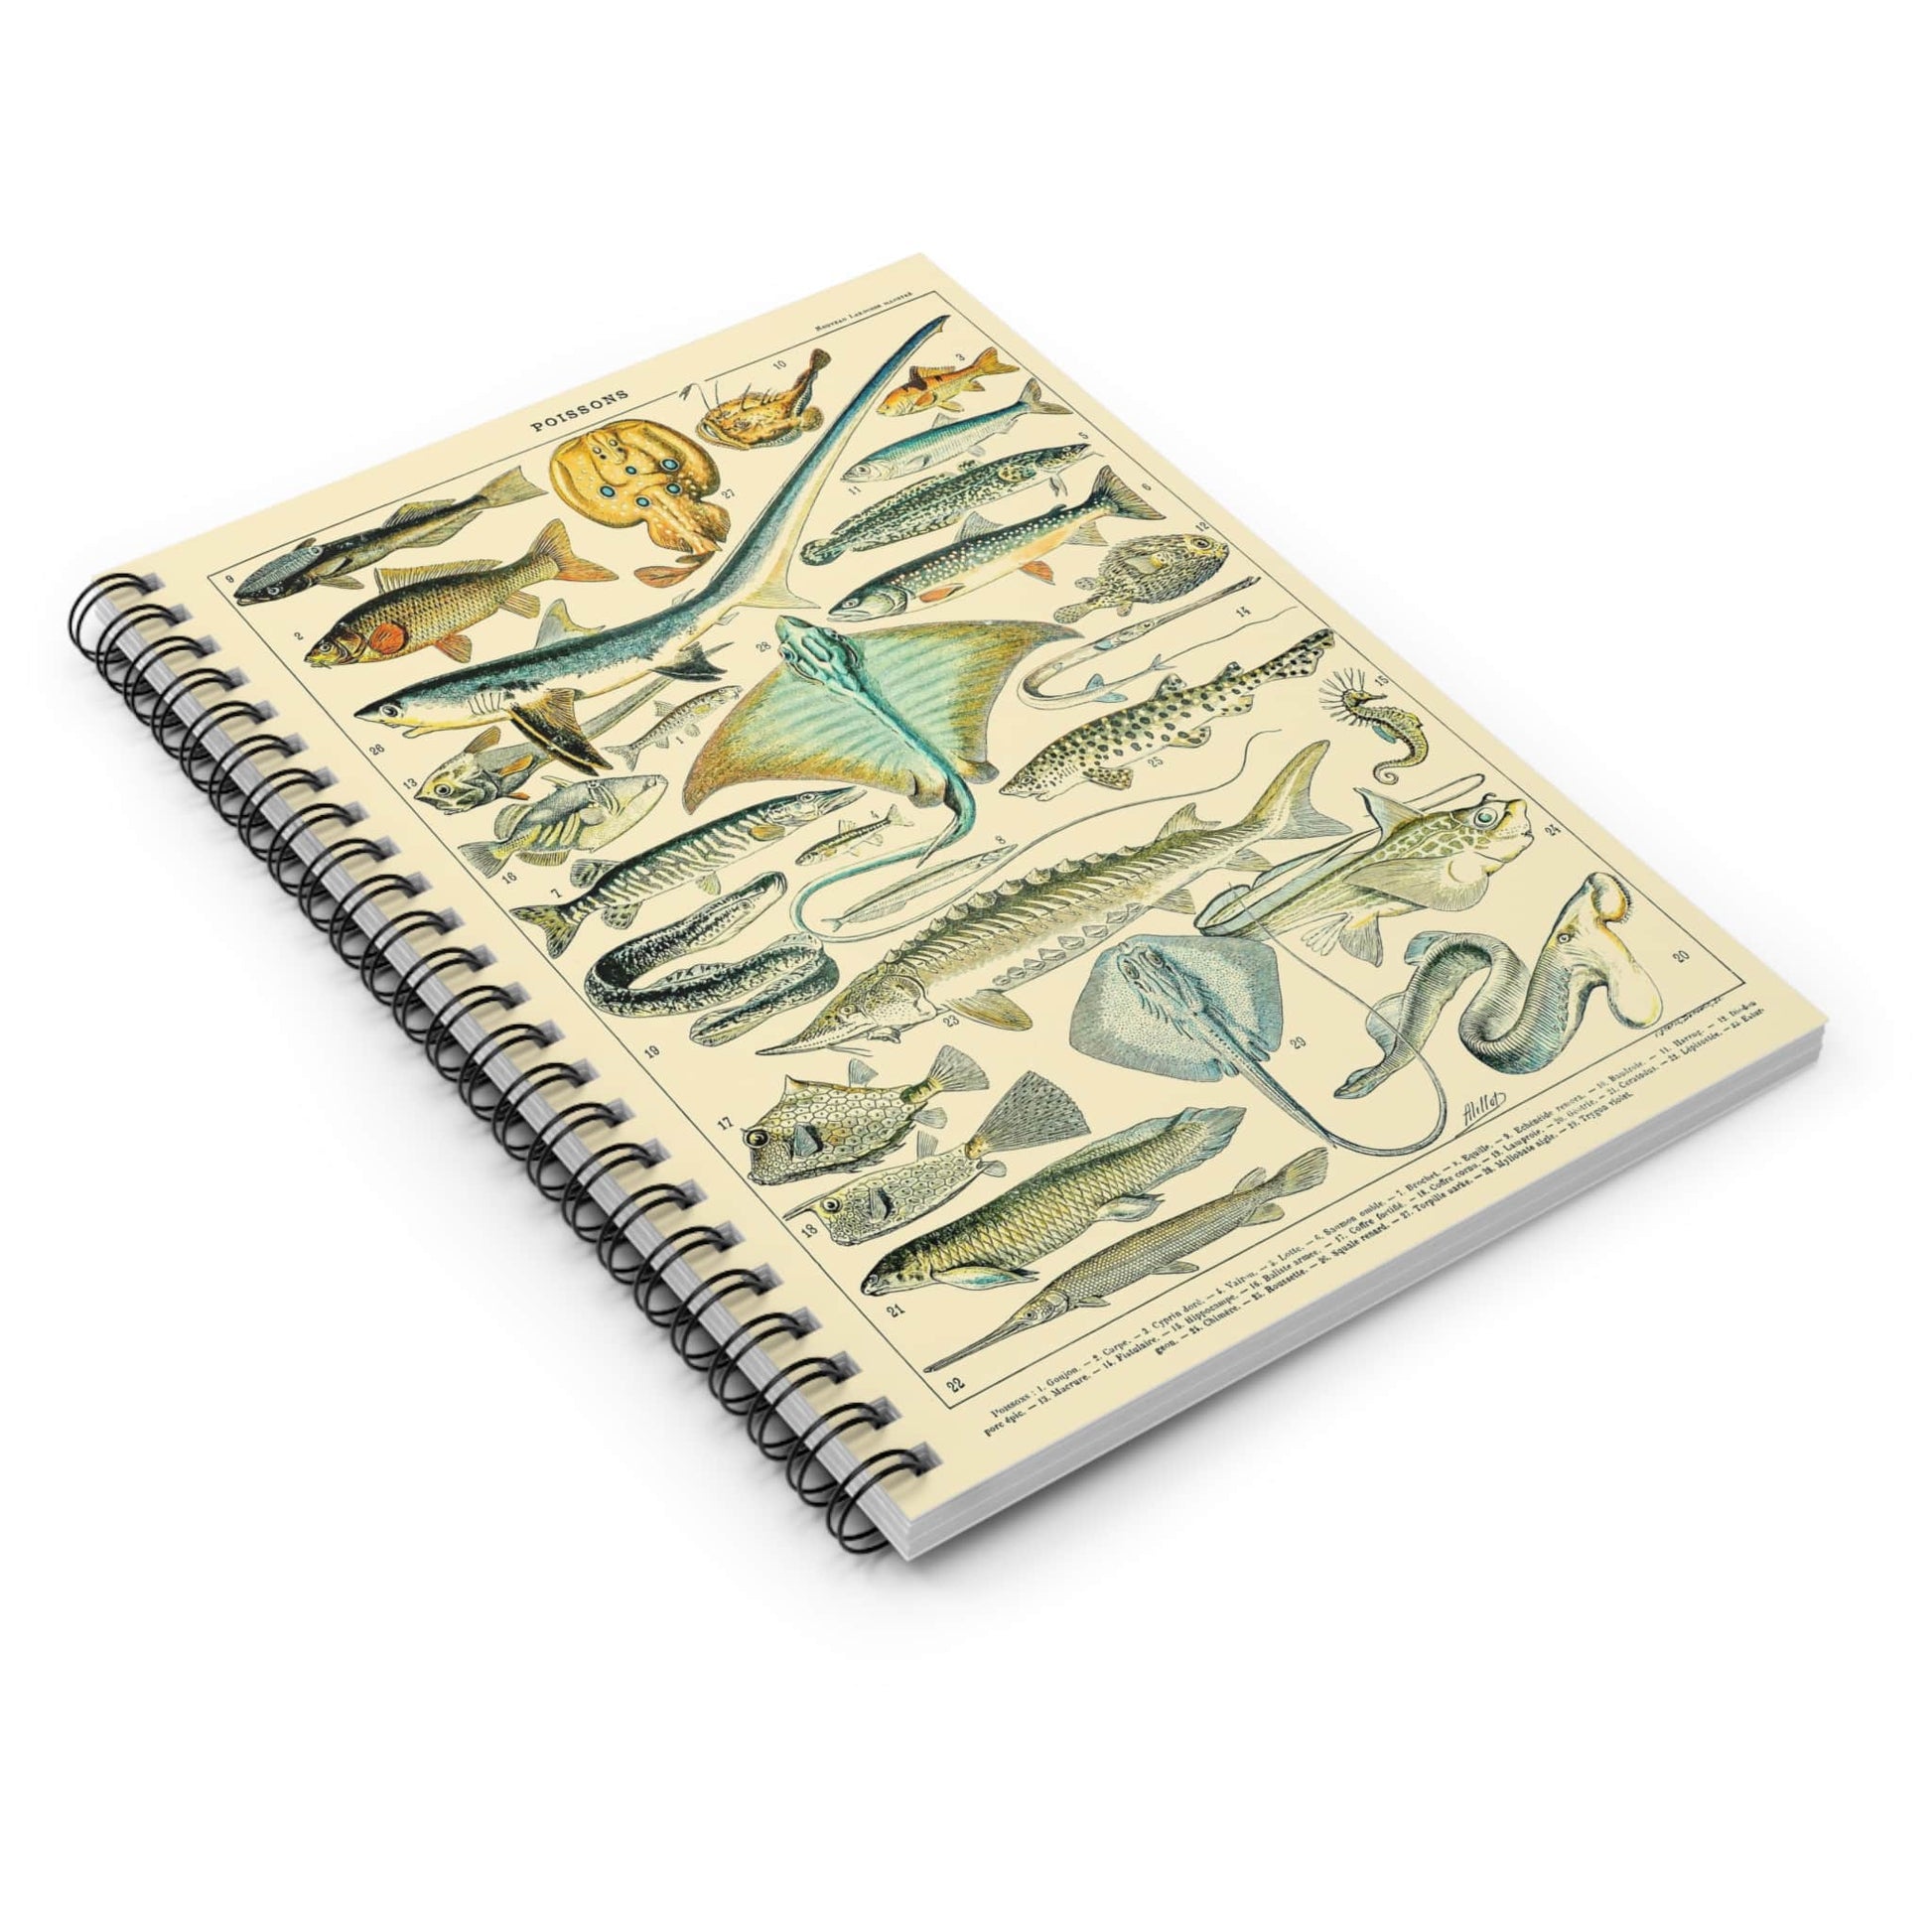 Fishing Spiral Notebook Laying Flat on White Surface